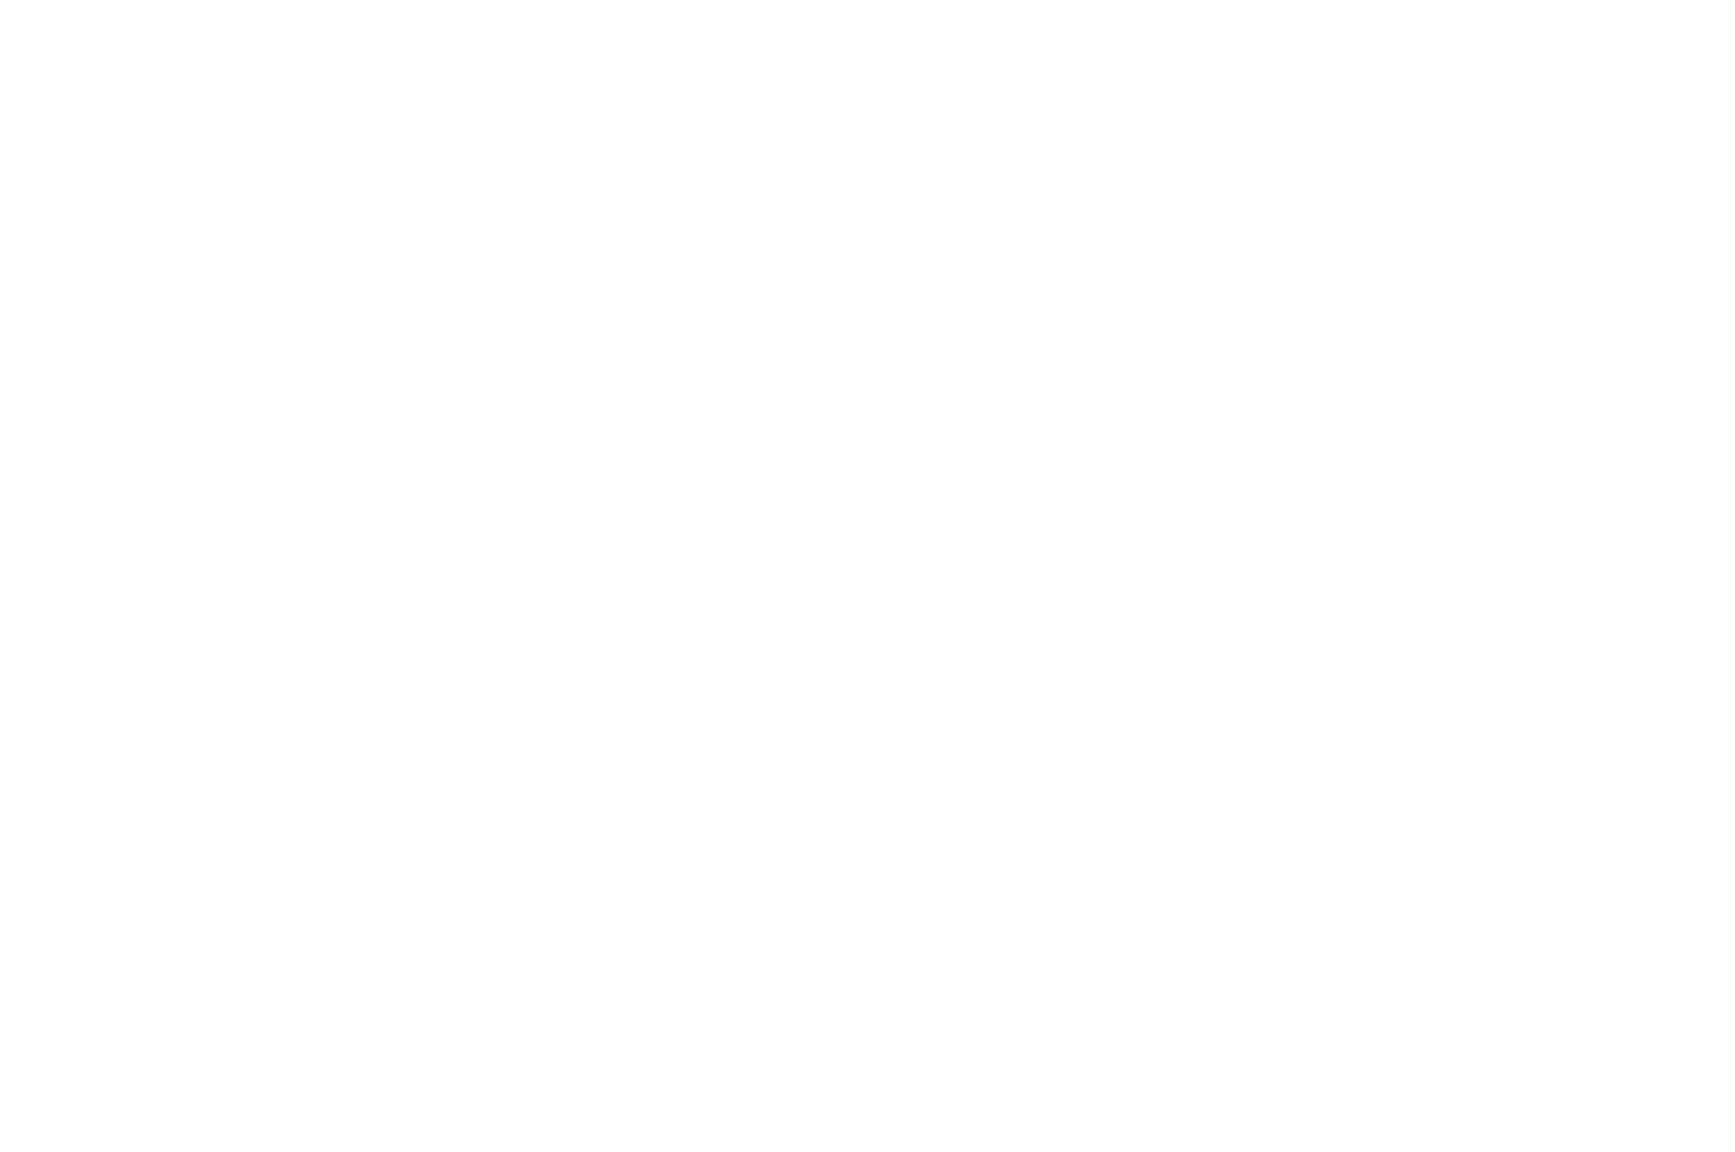 OUTSTANDING ACHIEVEMENT AWARD - CINEMATOGRAPHY - World Film Carnival - Singapore - 2020